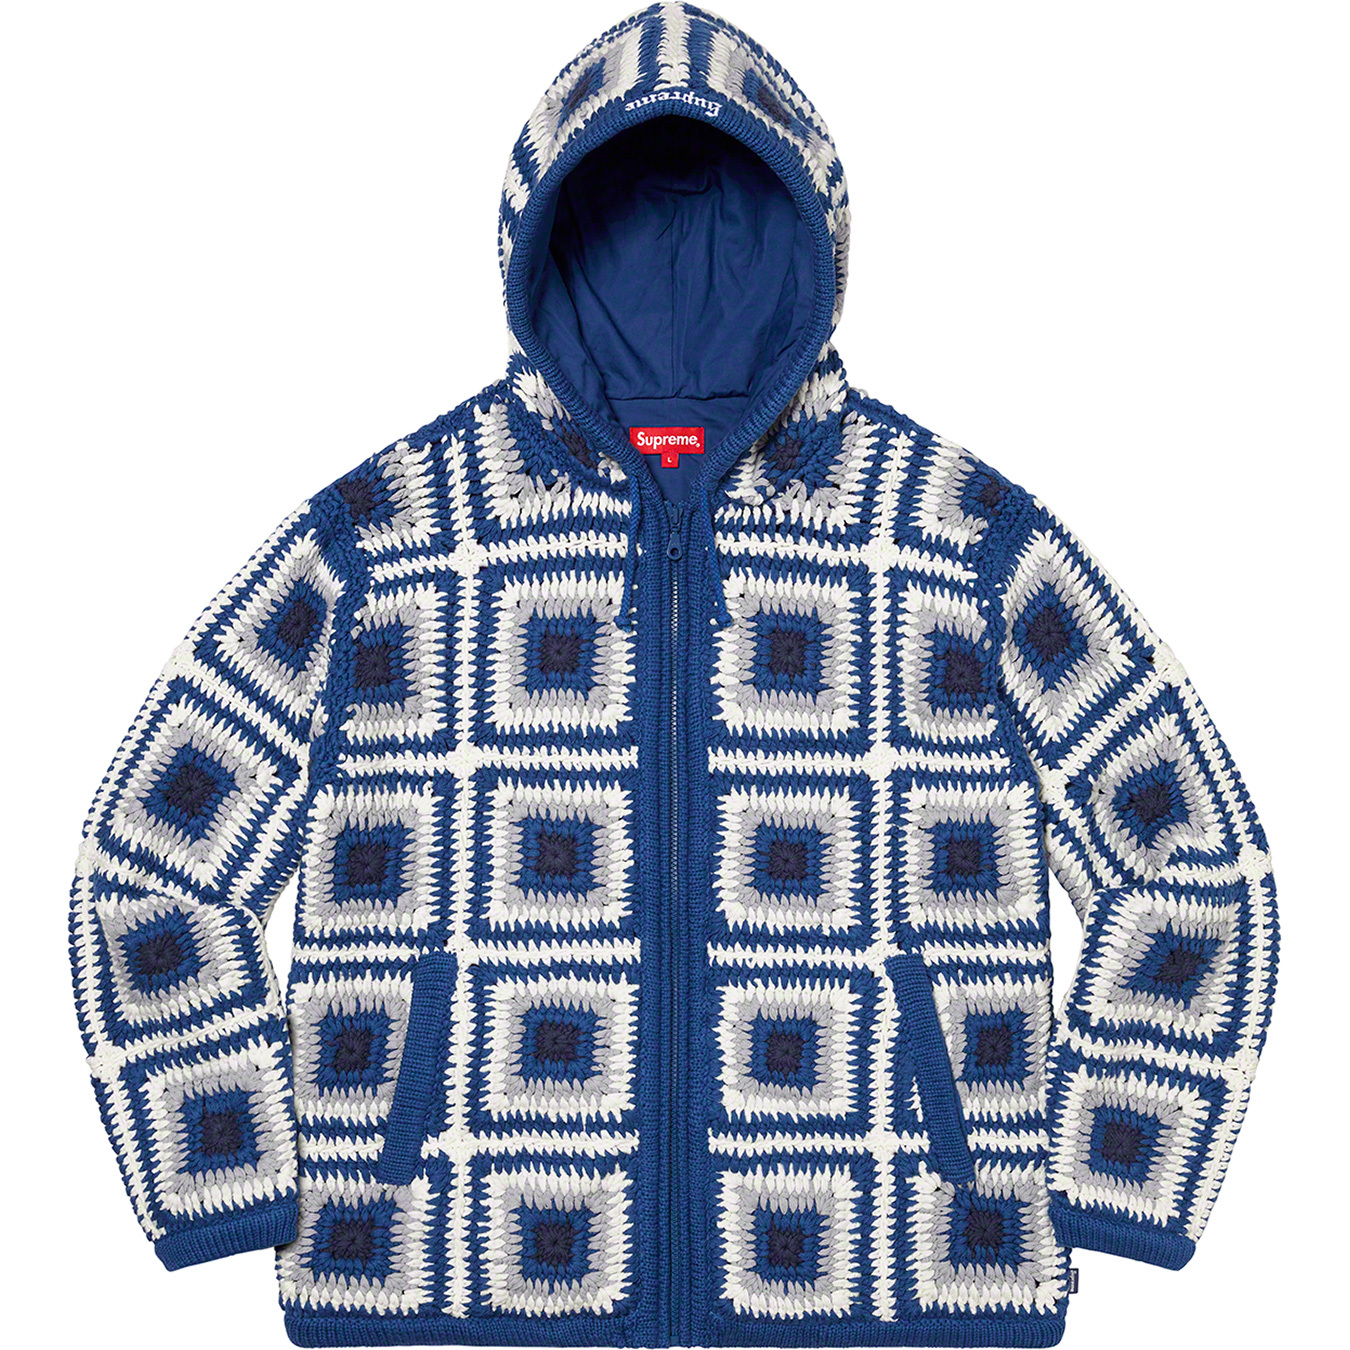 Crochet Hooded Zip Up Sweater - fall winter 2020 - Supreme